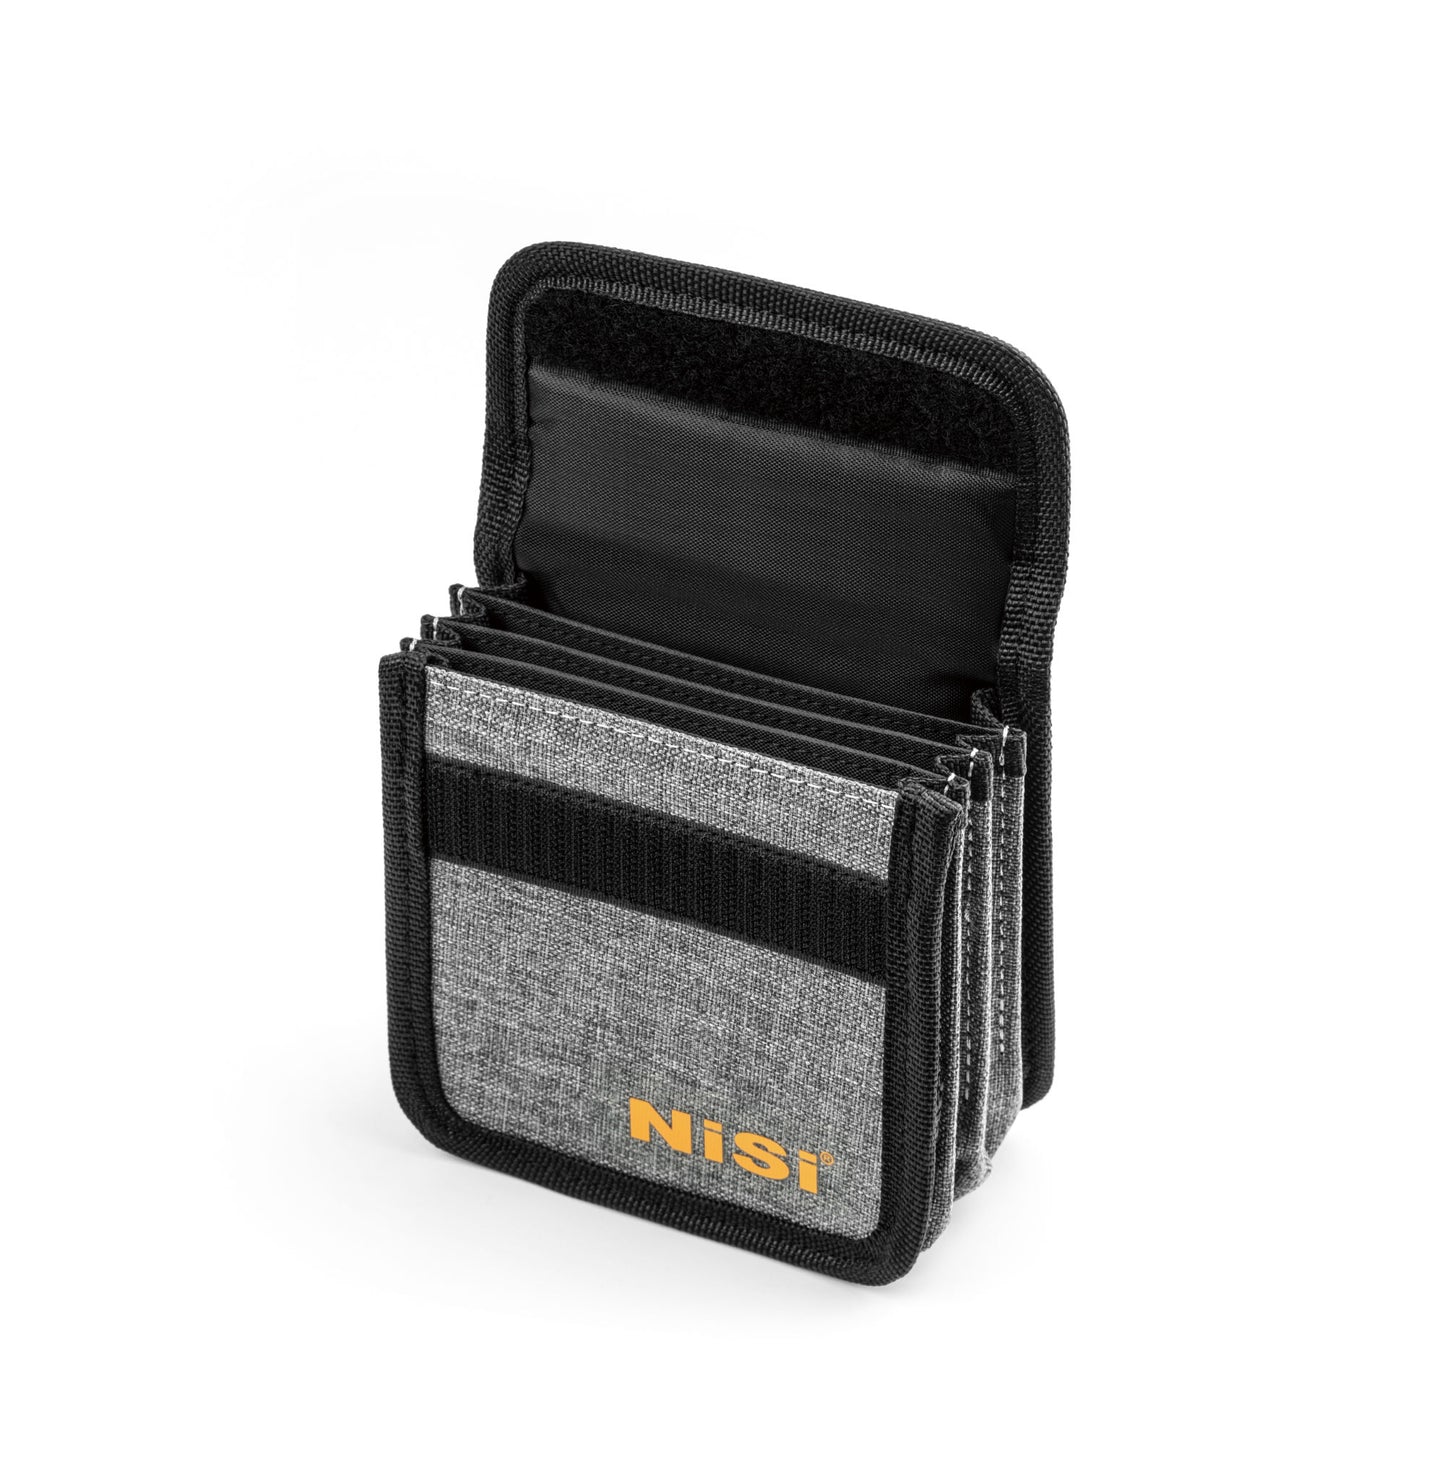 NiSi 82mm Circular Advance Filter Kit